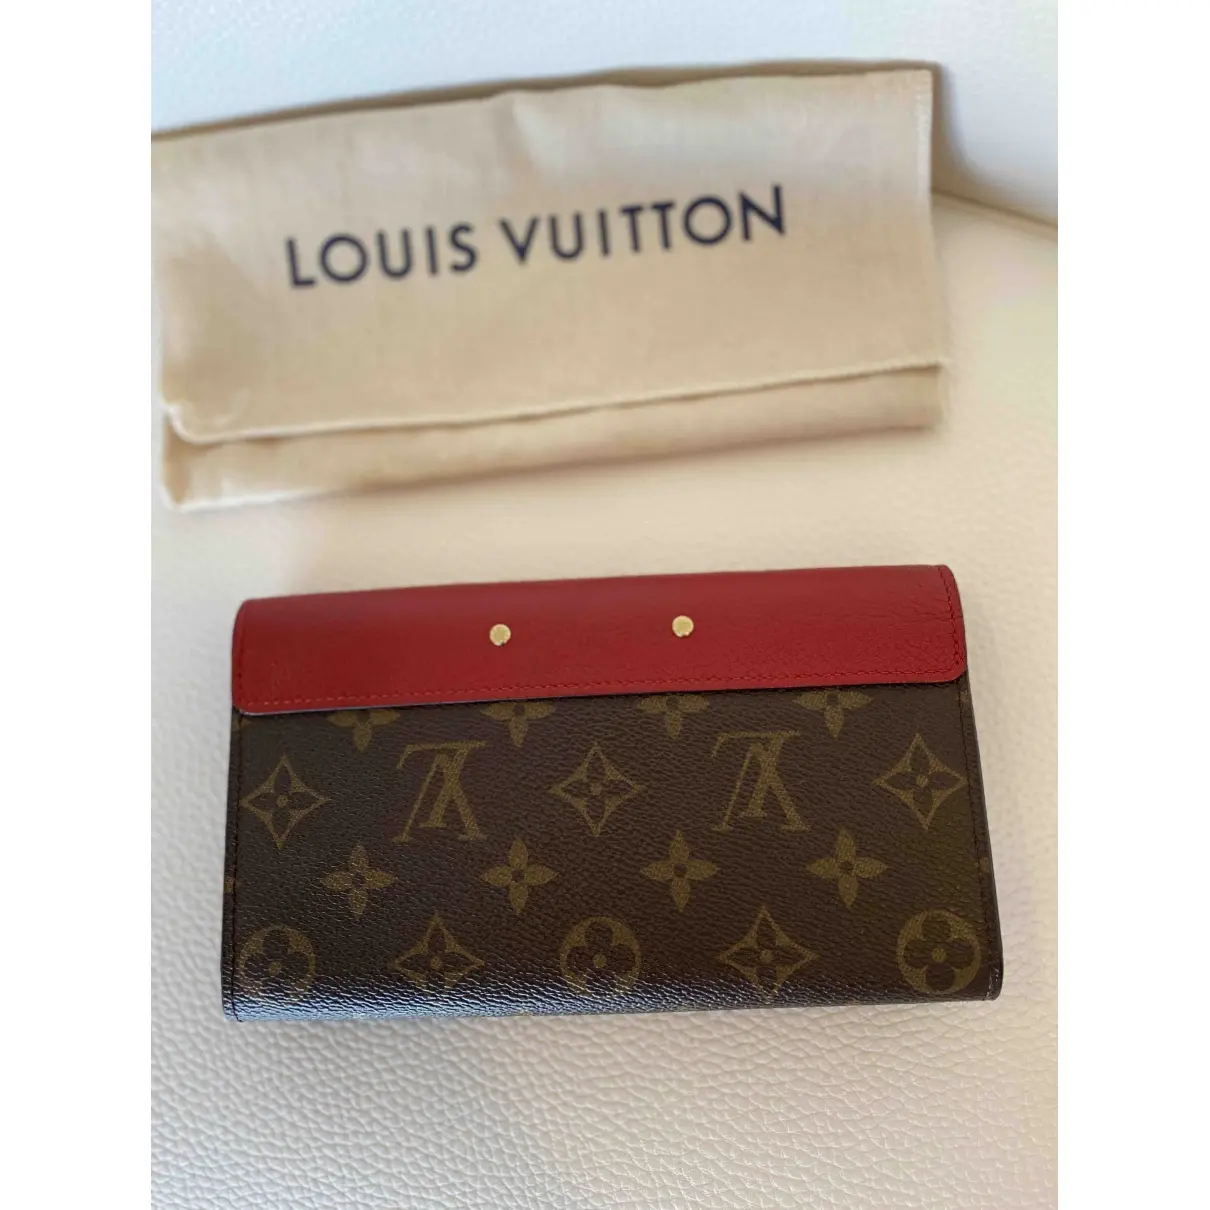 Buy Louis Vuitton Pallas cloth wallet online